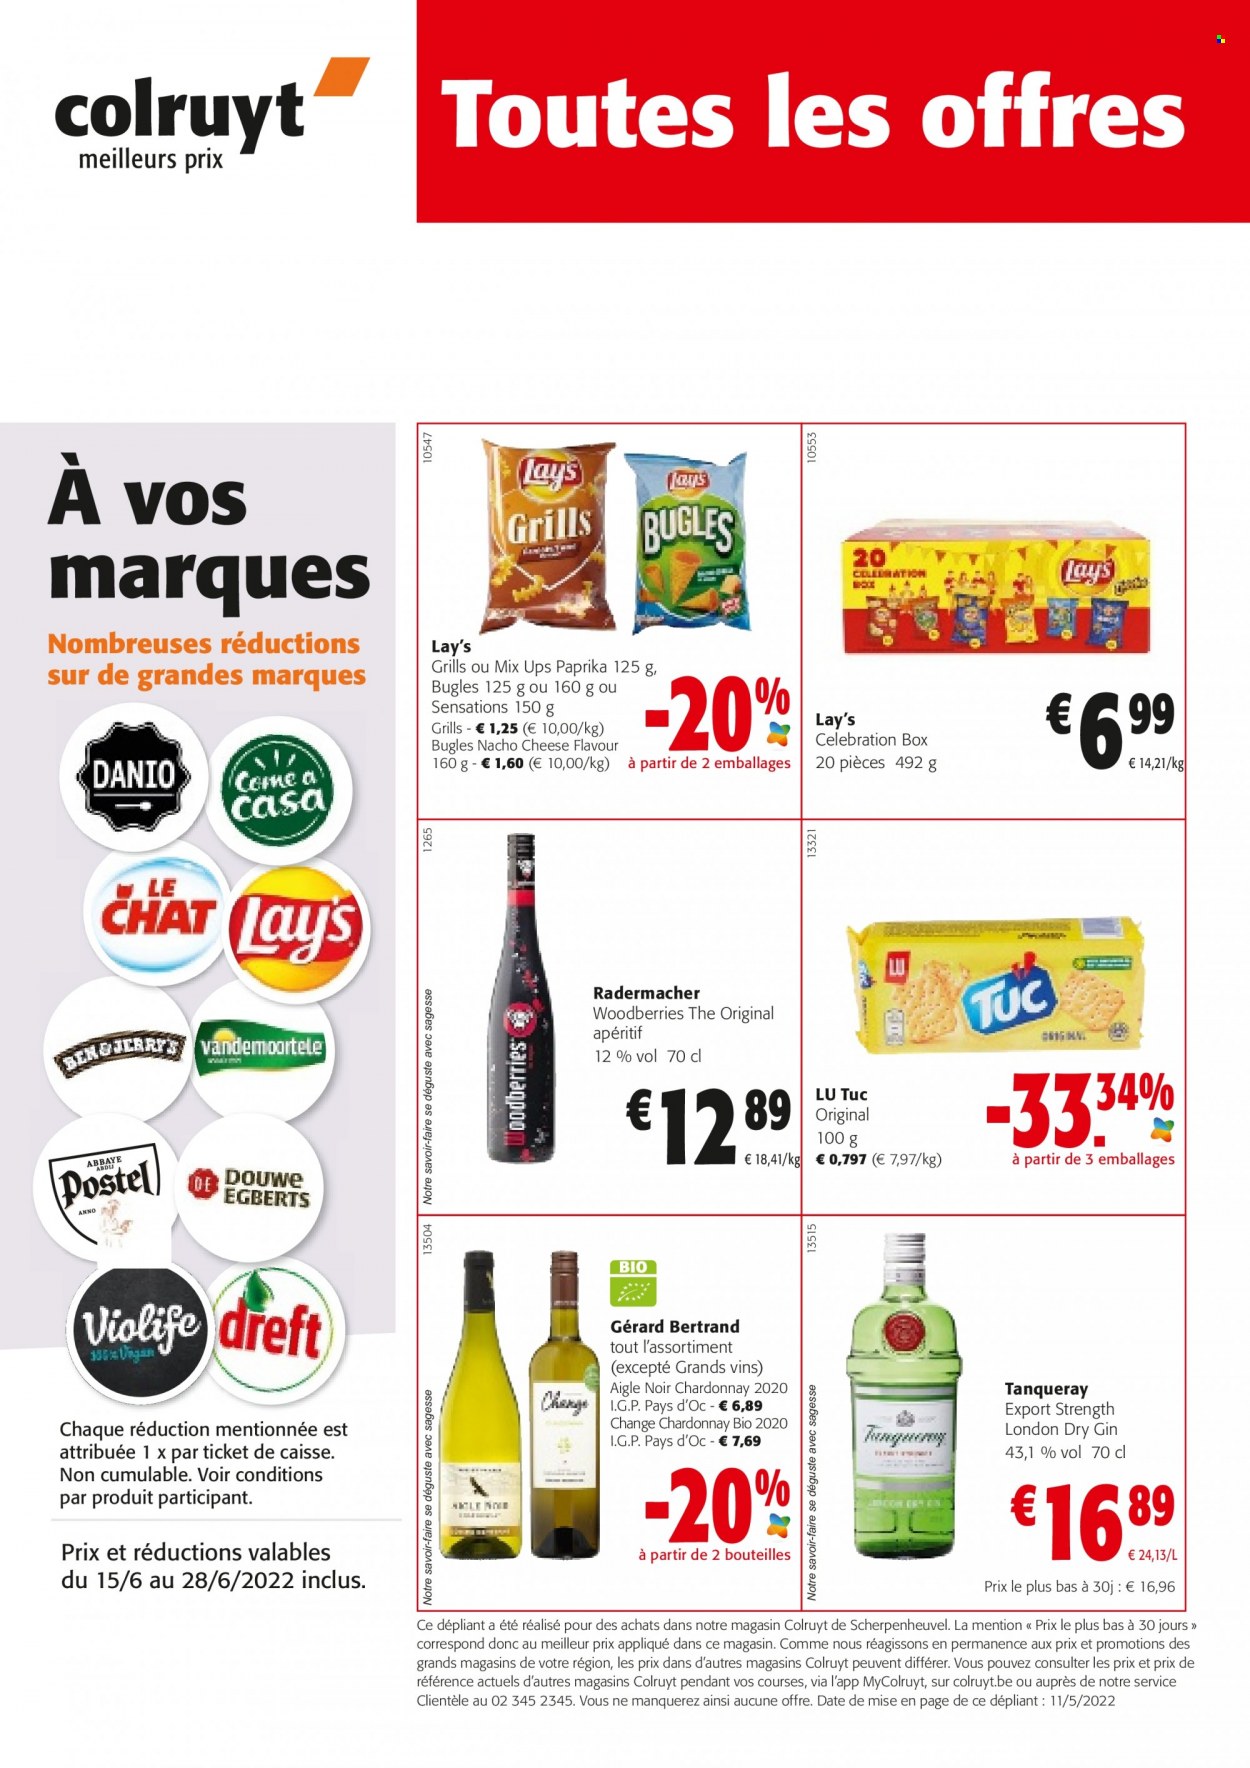 thumbnail - Catalogue Colruyt - 15/06/2022 - 28/06/2022 - Produits soldés - LU, chips, Lay’s, TUC, nacho, vin, gin, apéritif. Page 1.